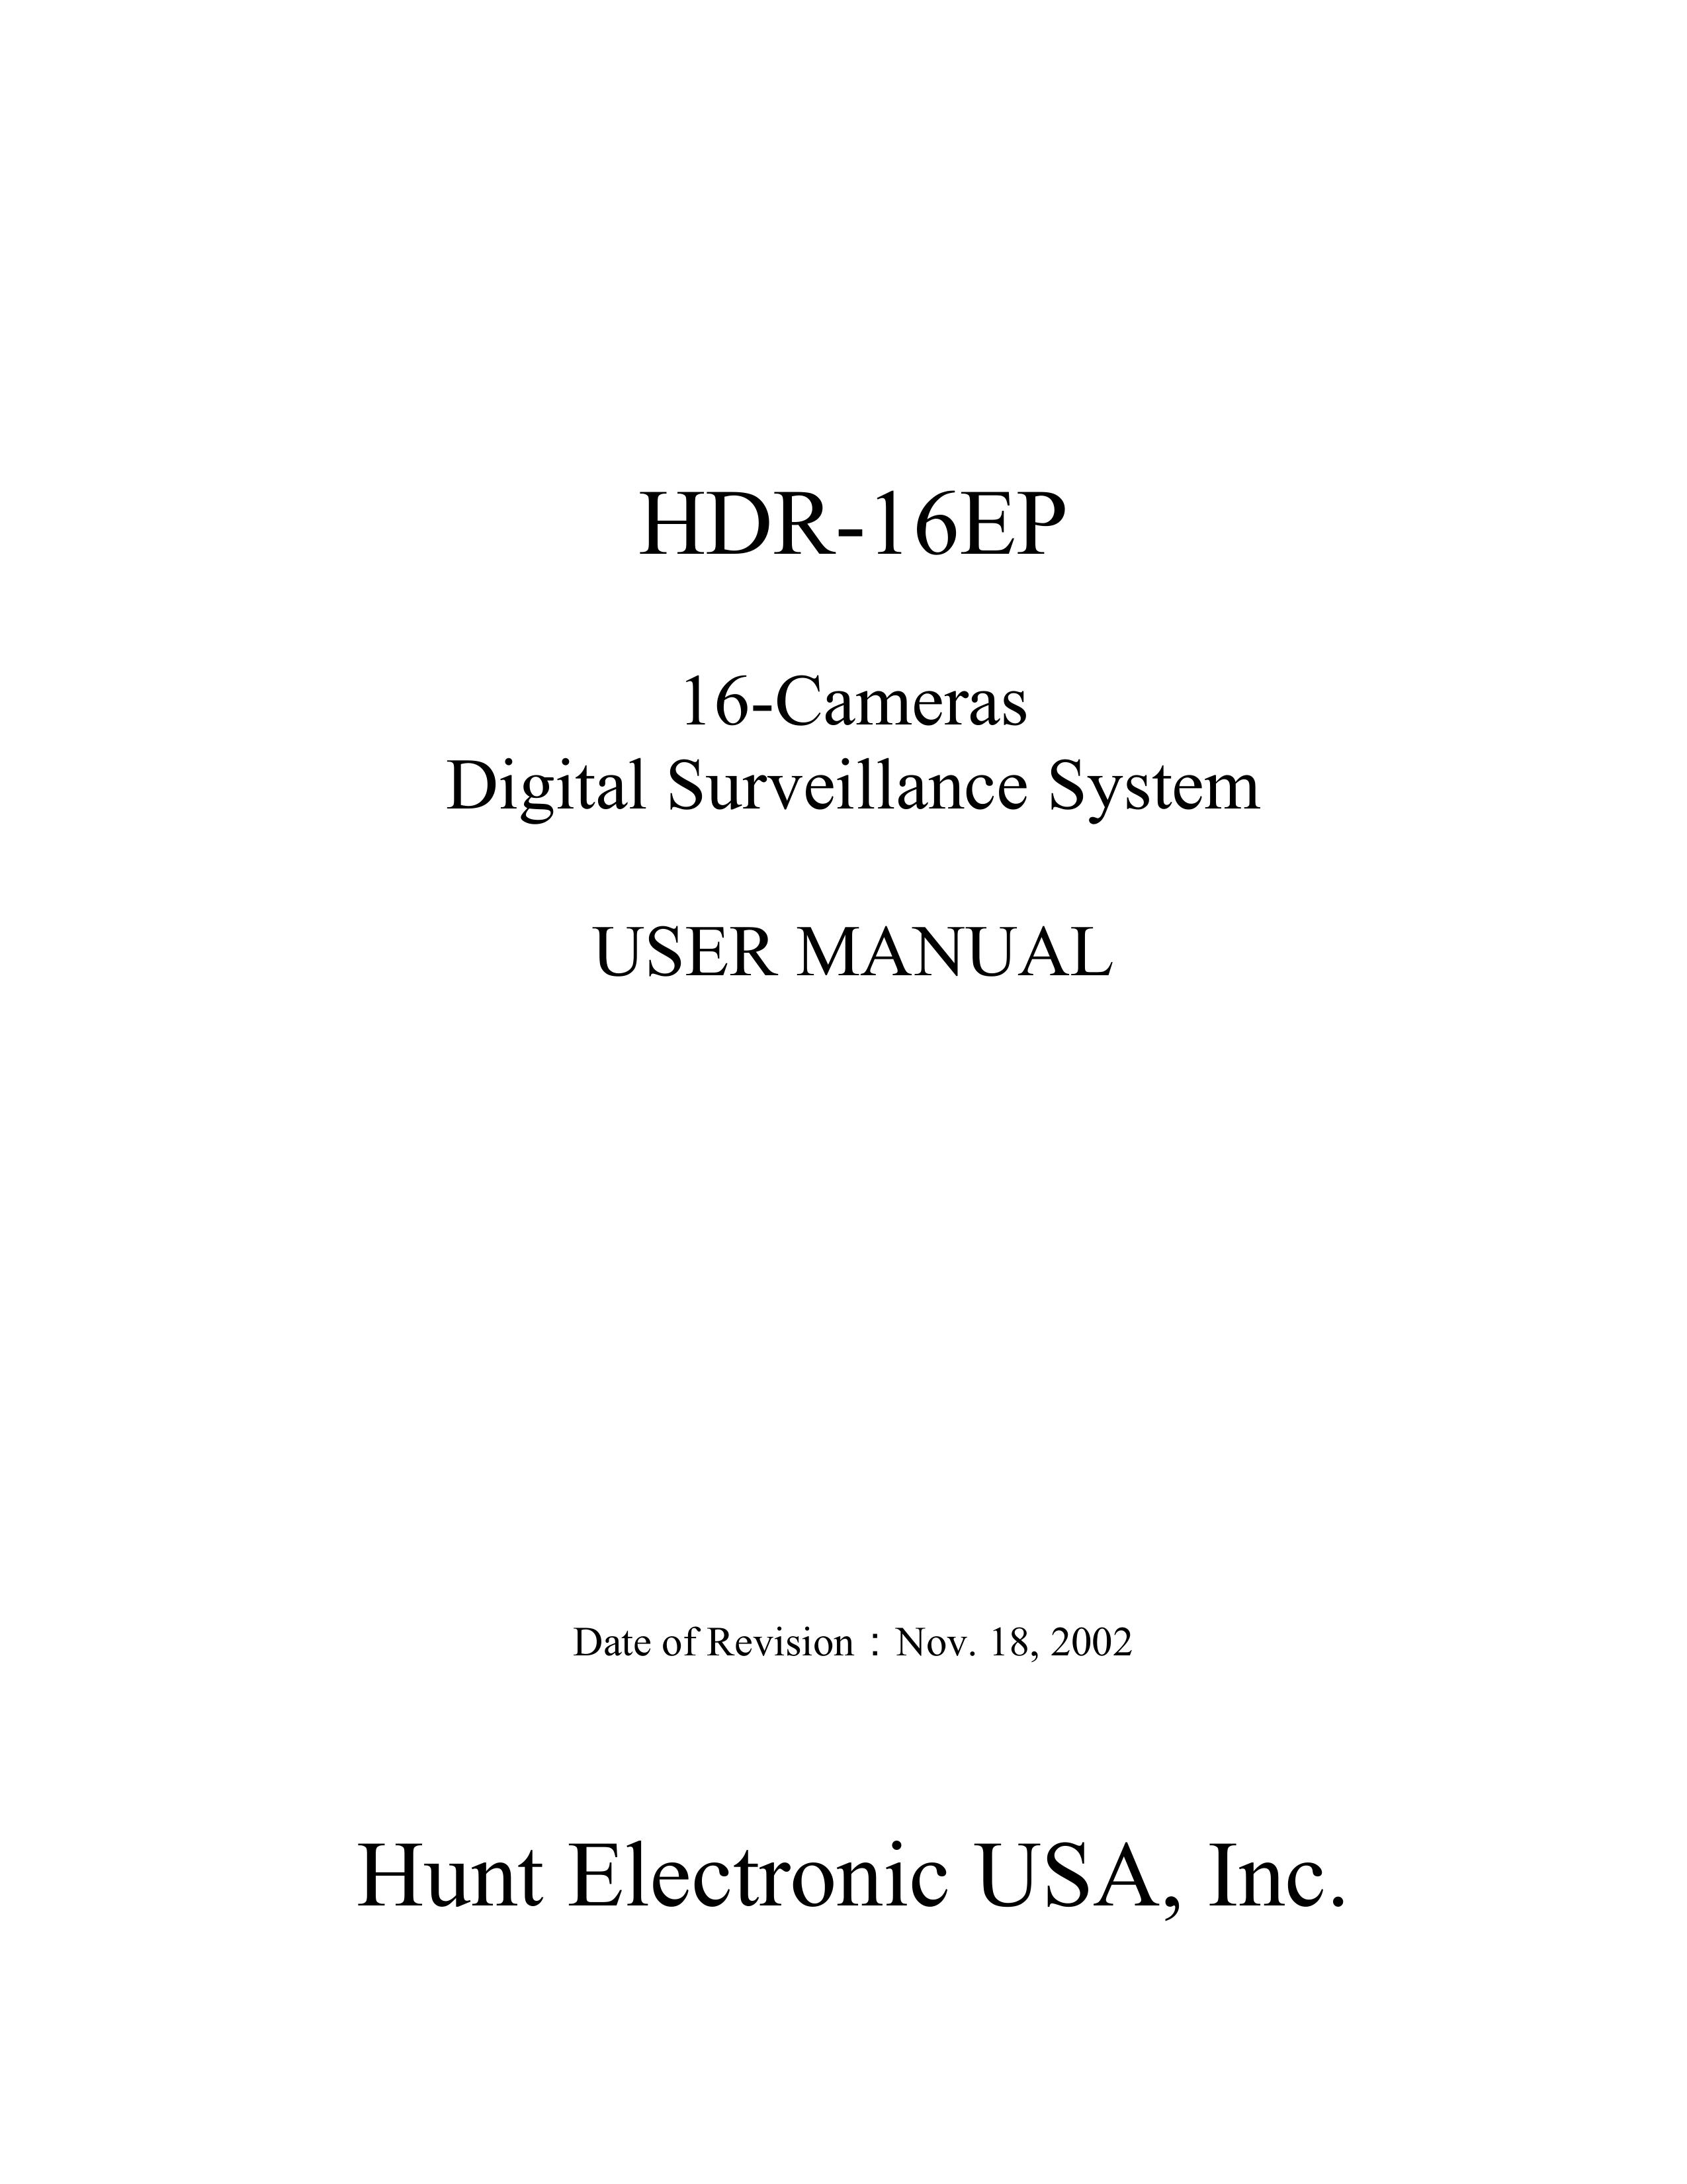 BenQ HDR-16EP Security Camera User Manual